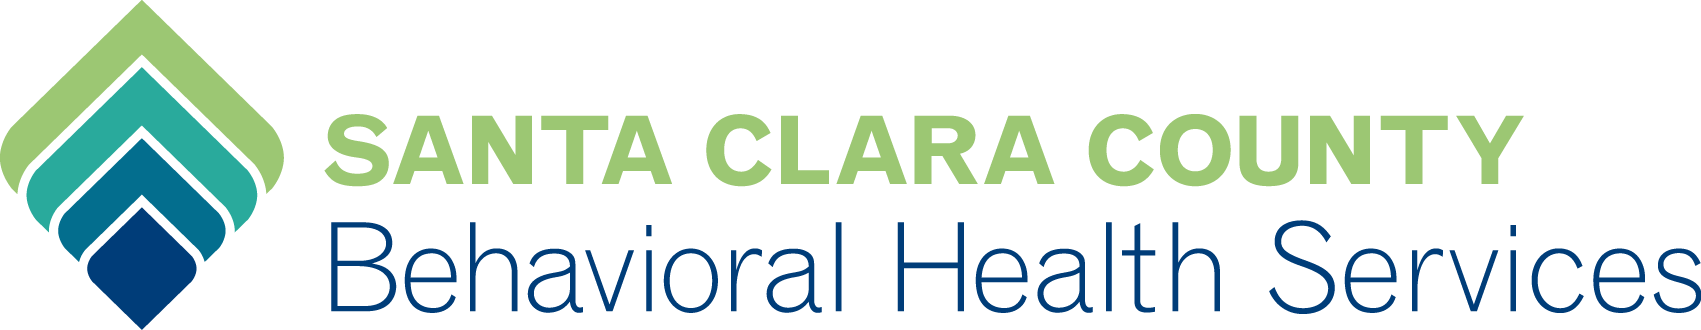 Santa Clara Valley Behavioral Health Services Logo